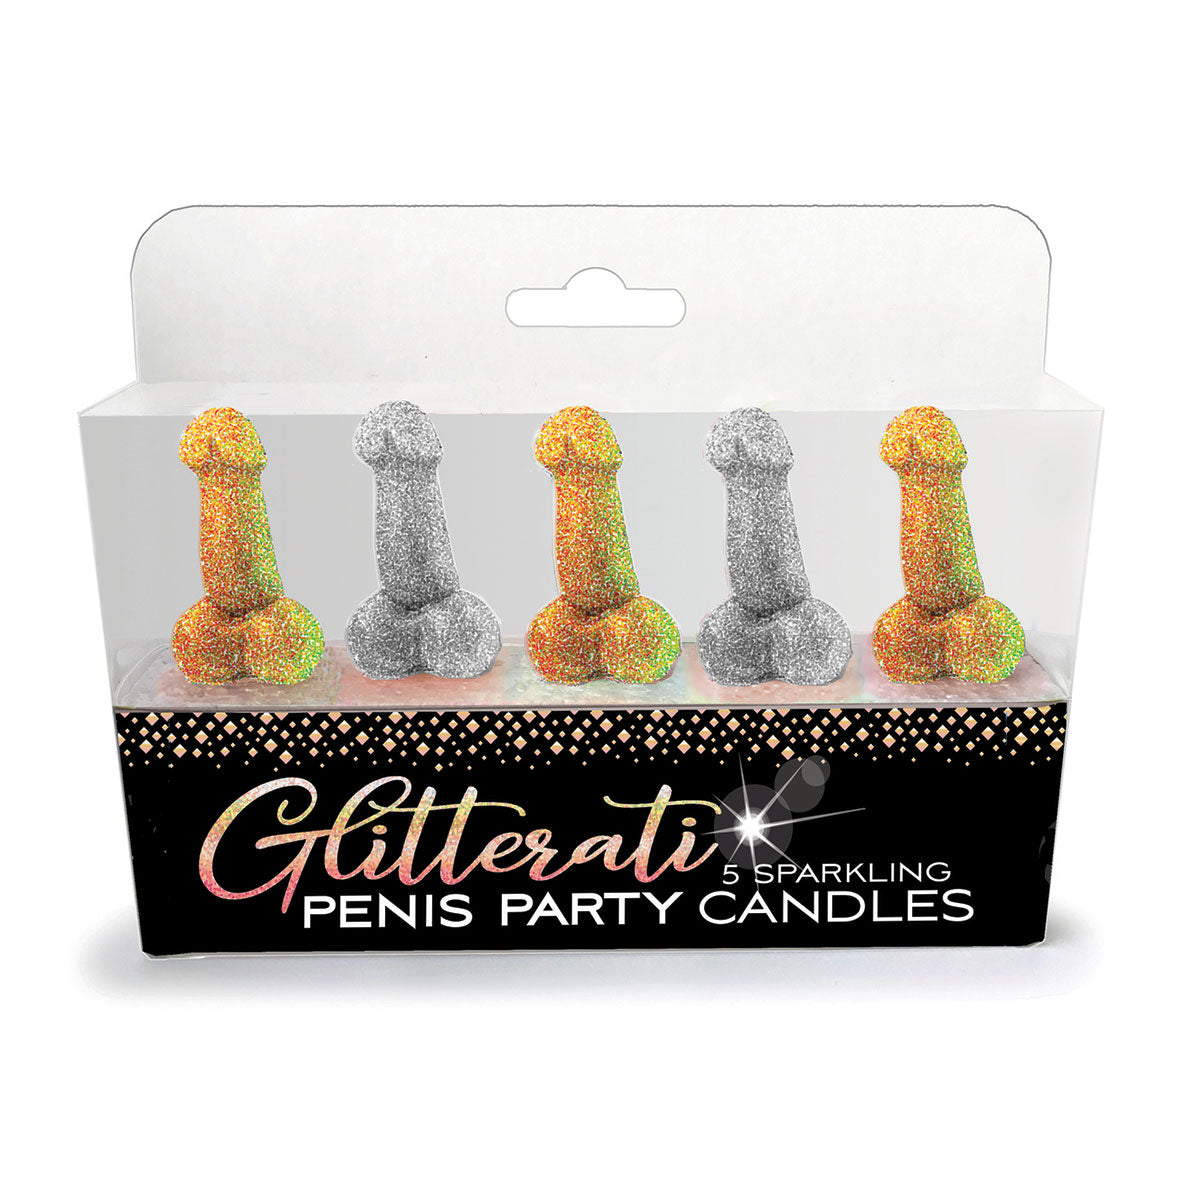 Glitterati Penis Party Candles 5pk